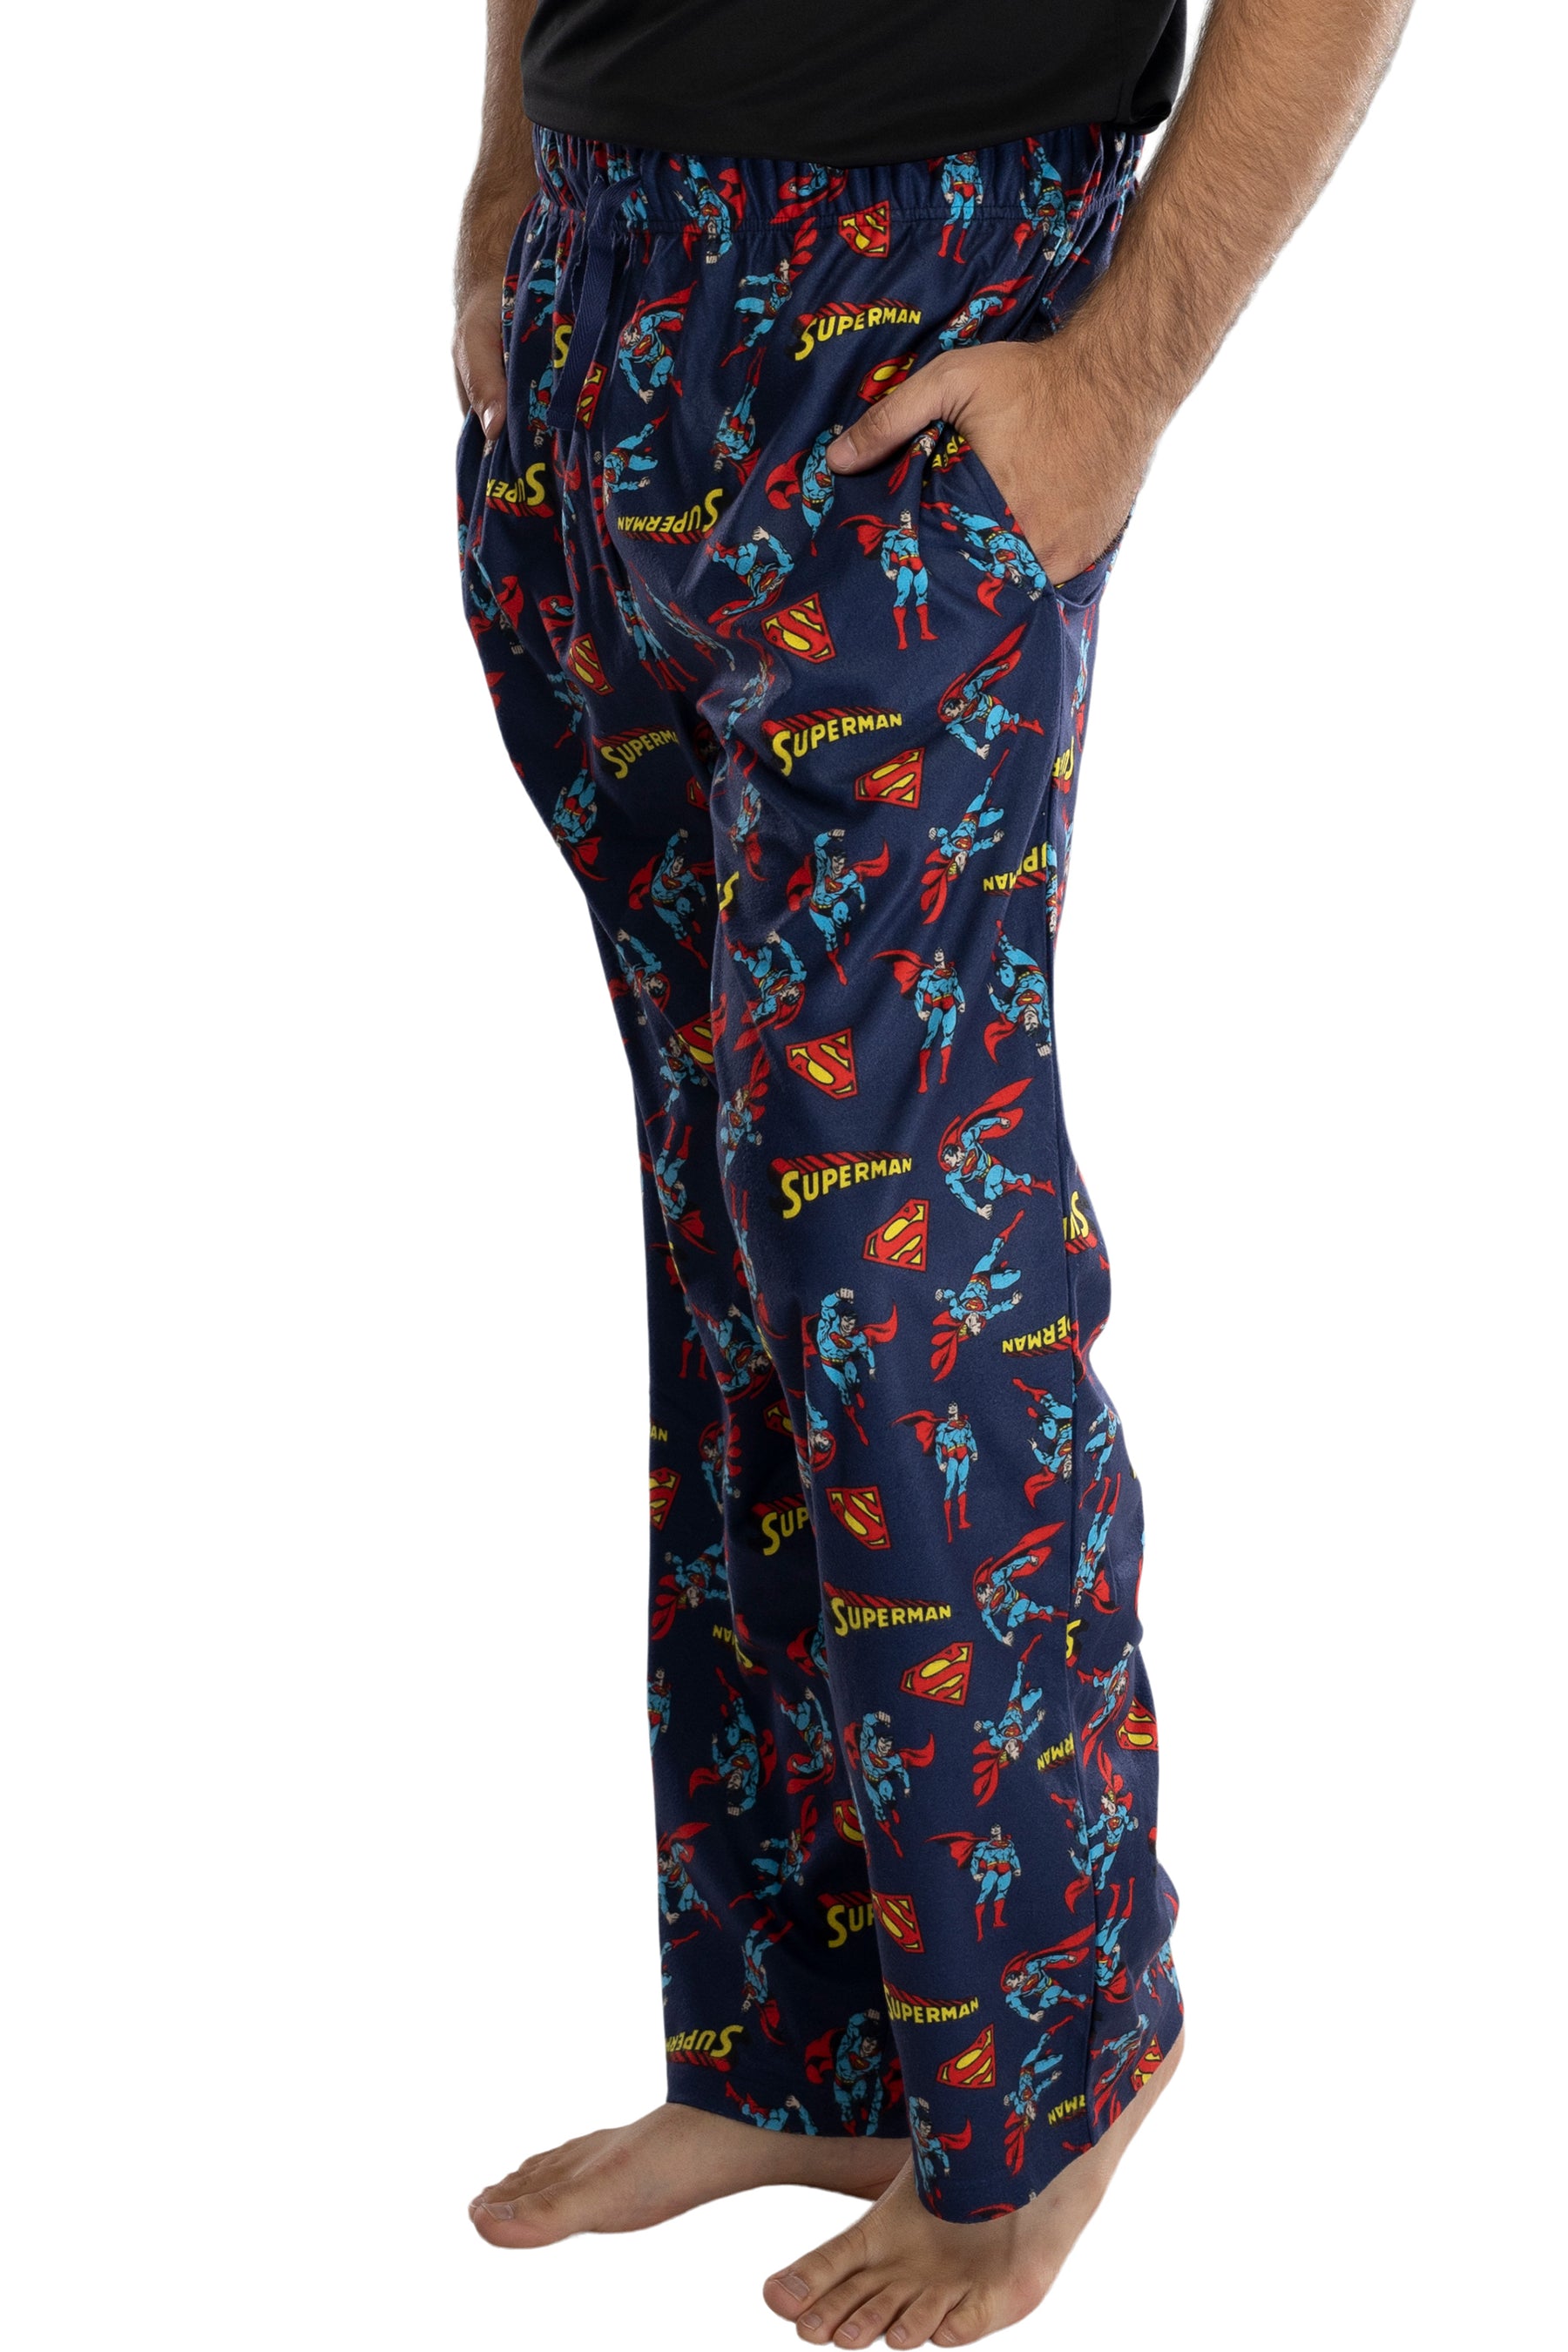 Men's Superhero Pajamas | Mens pajamas set, Men short sleeve, Funny outfits